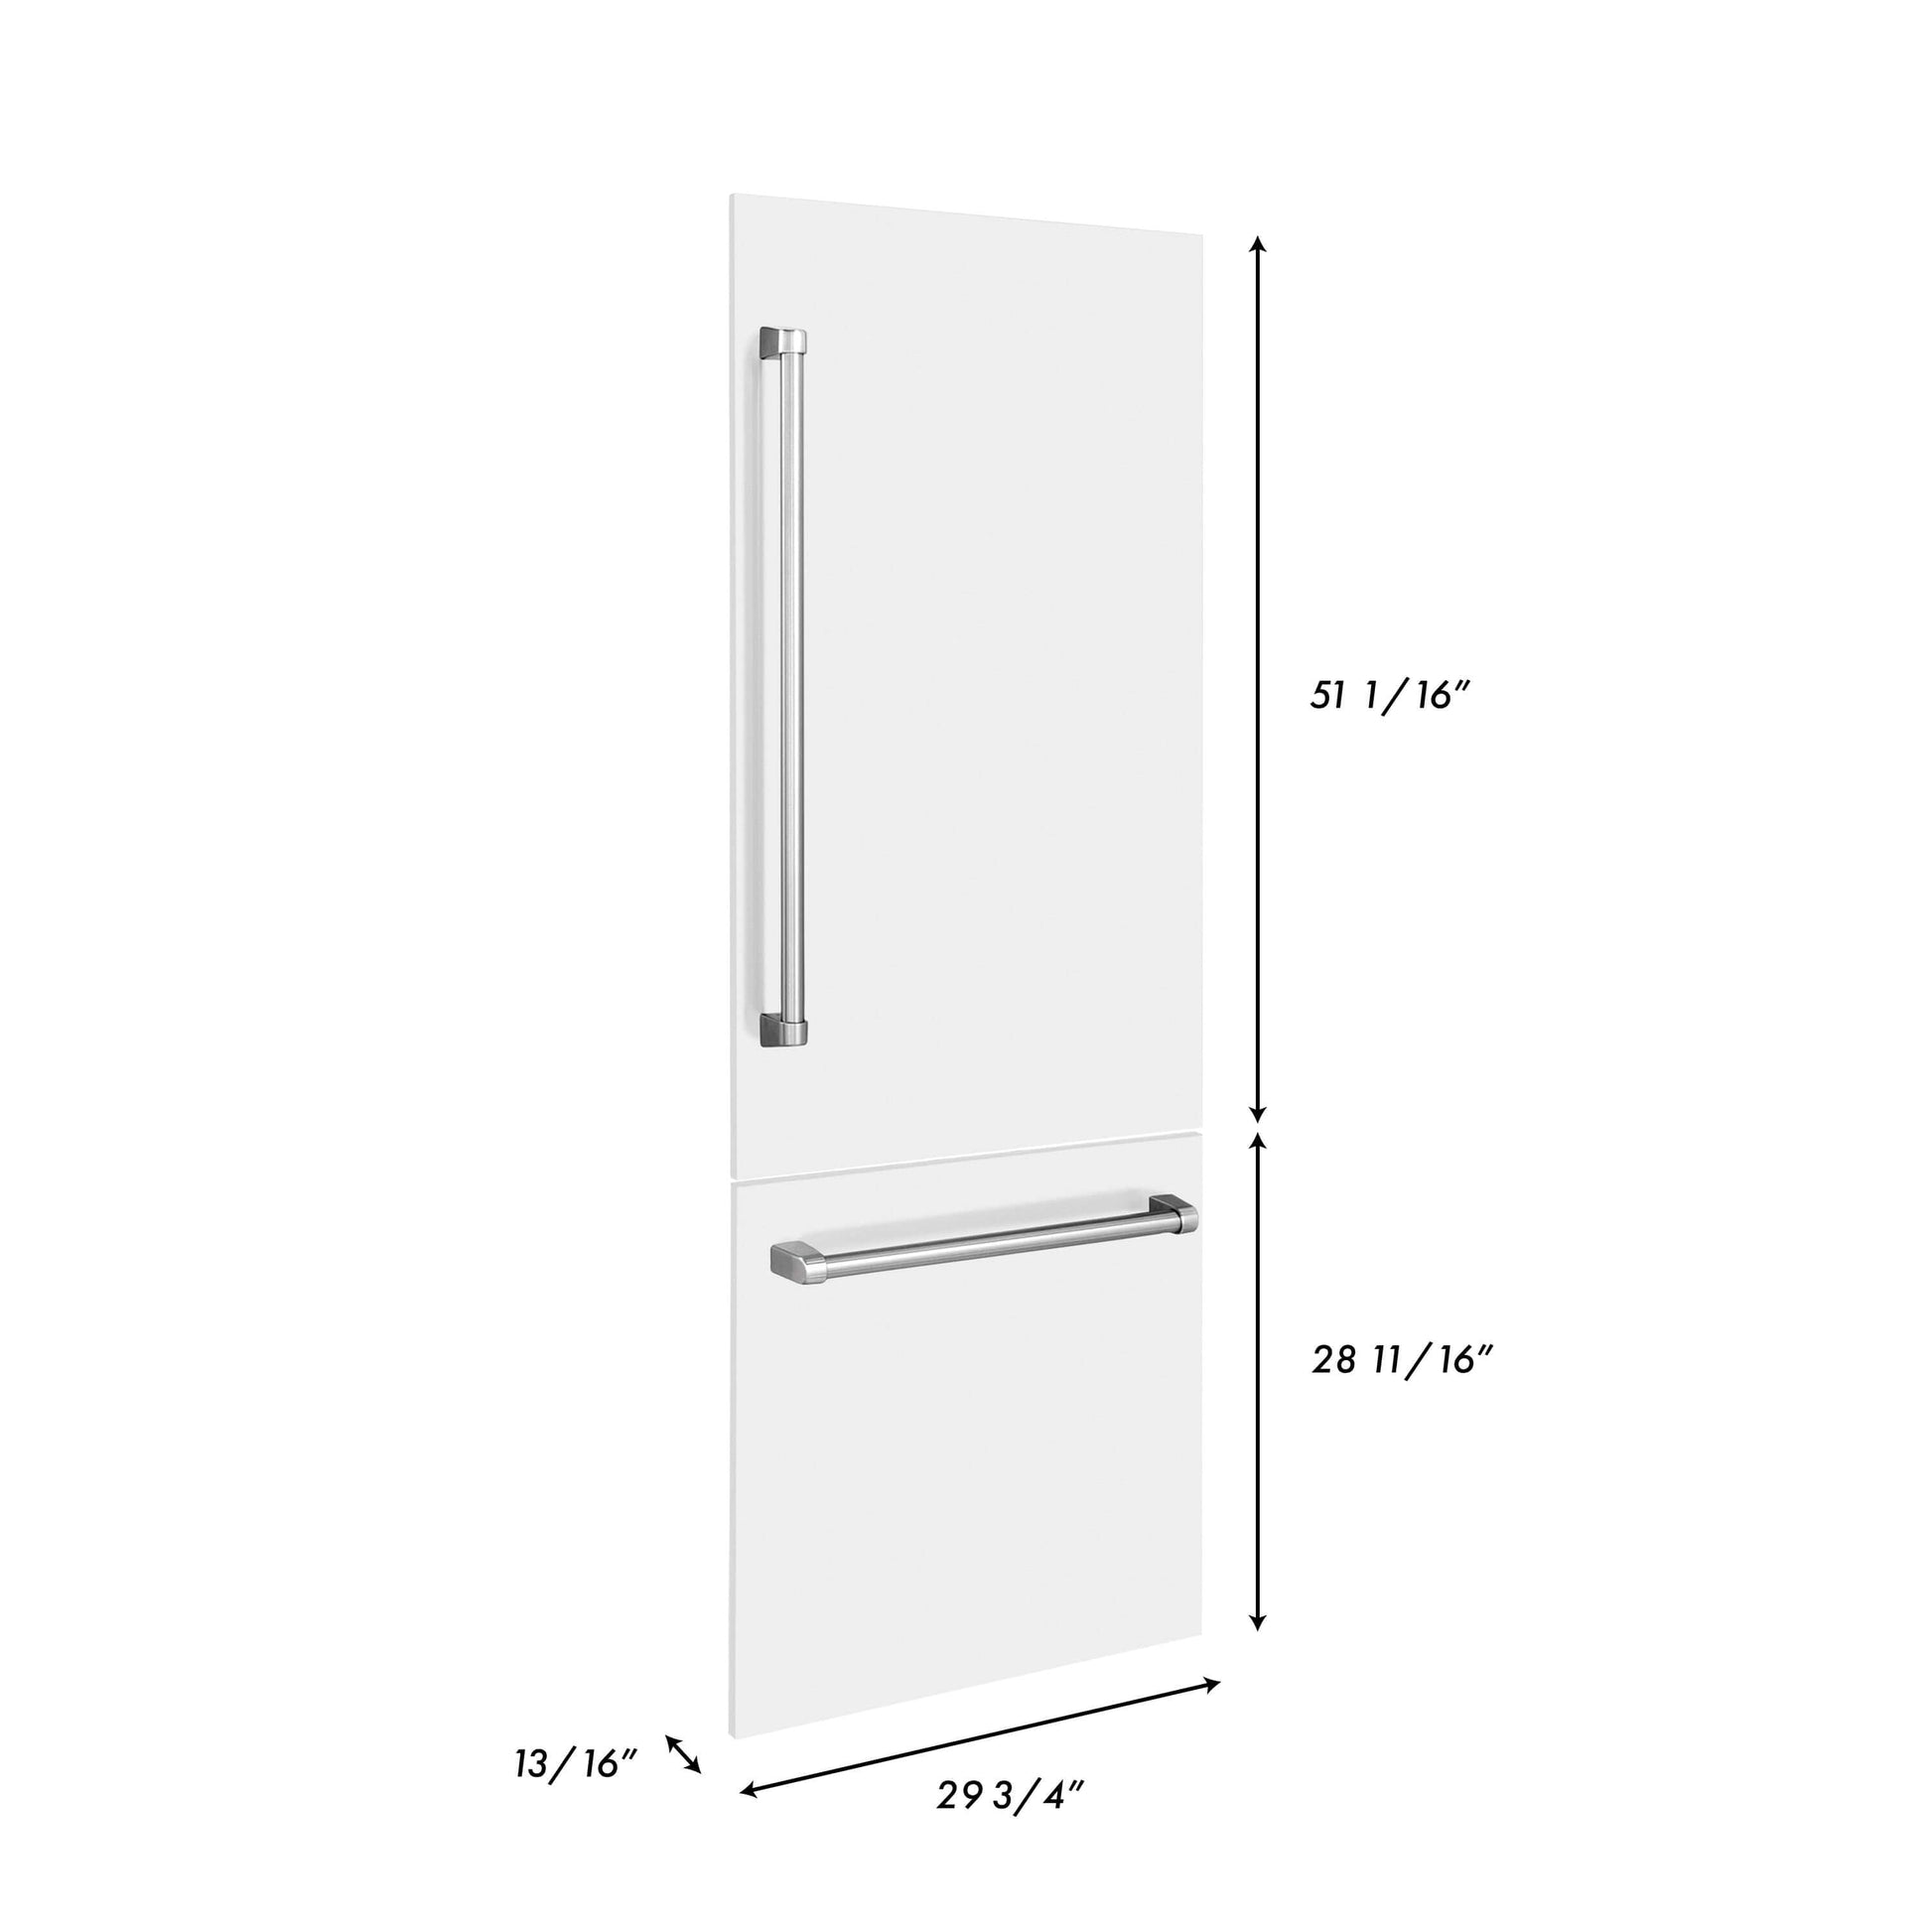 Panels & Handles Only - ZLINE 30" Refrigerator Panels in Matte White